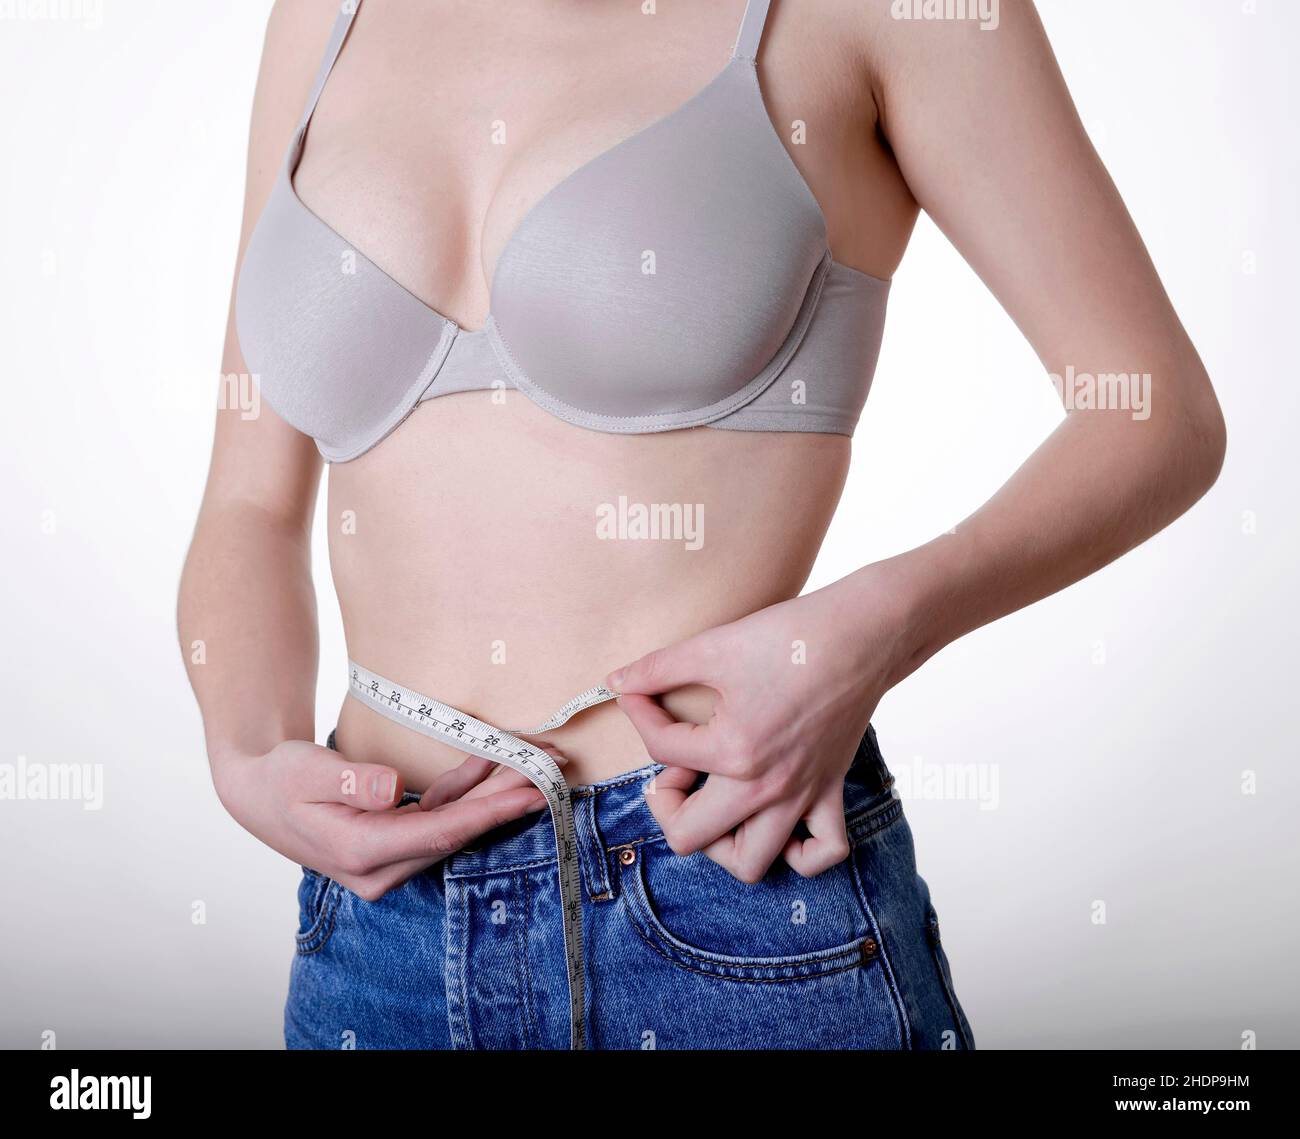 163 Woman Measuring Her Bra Size Tape Measure Stock Photos - Free